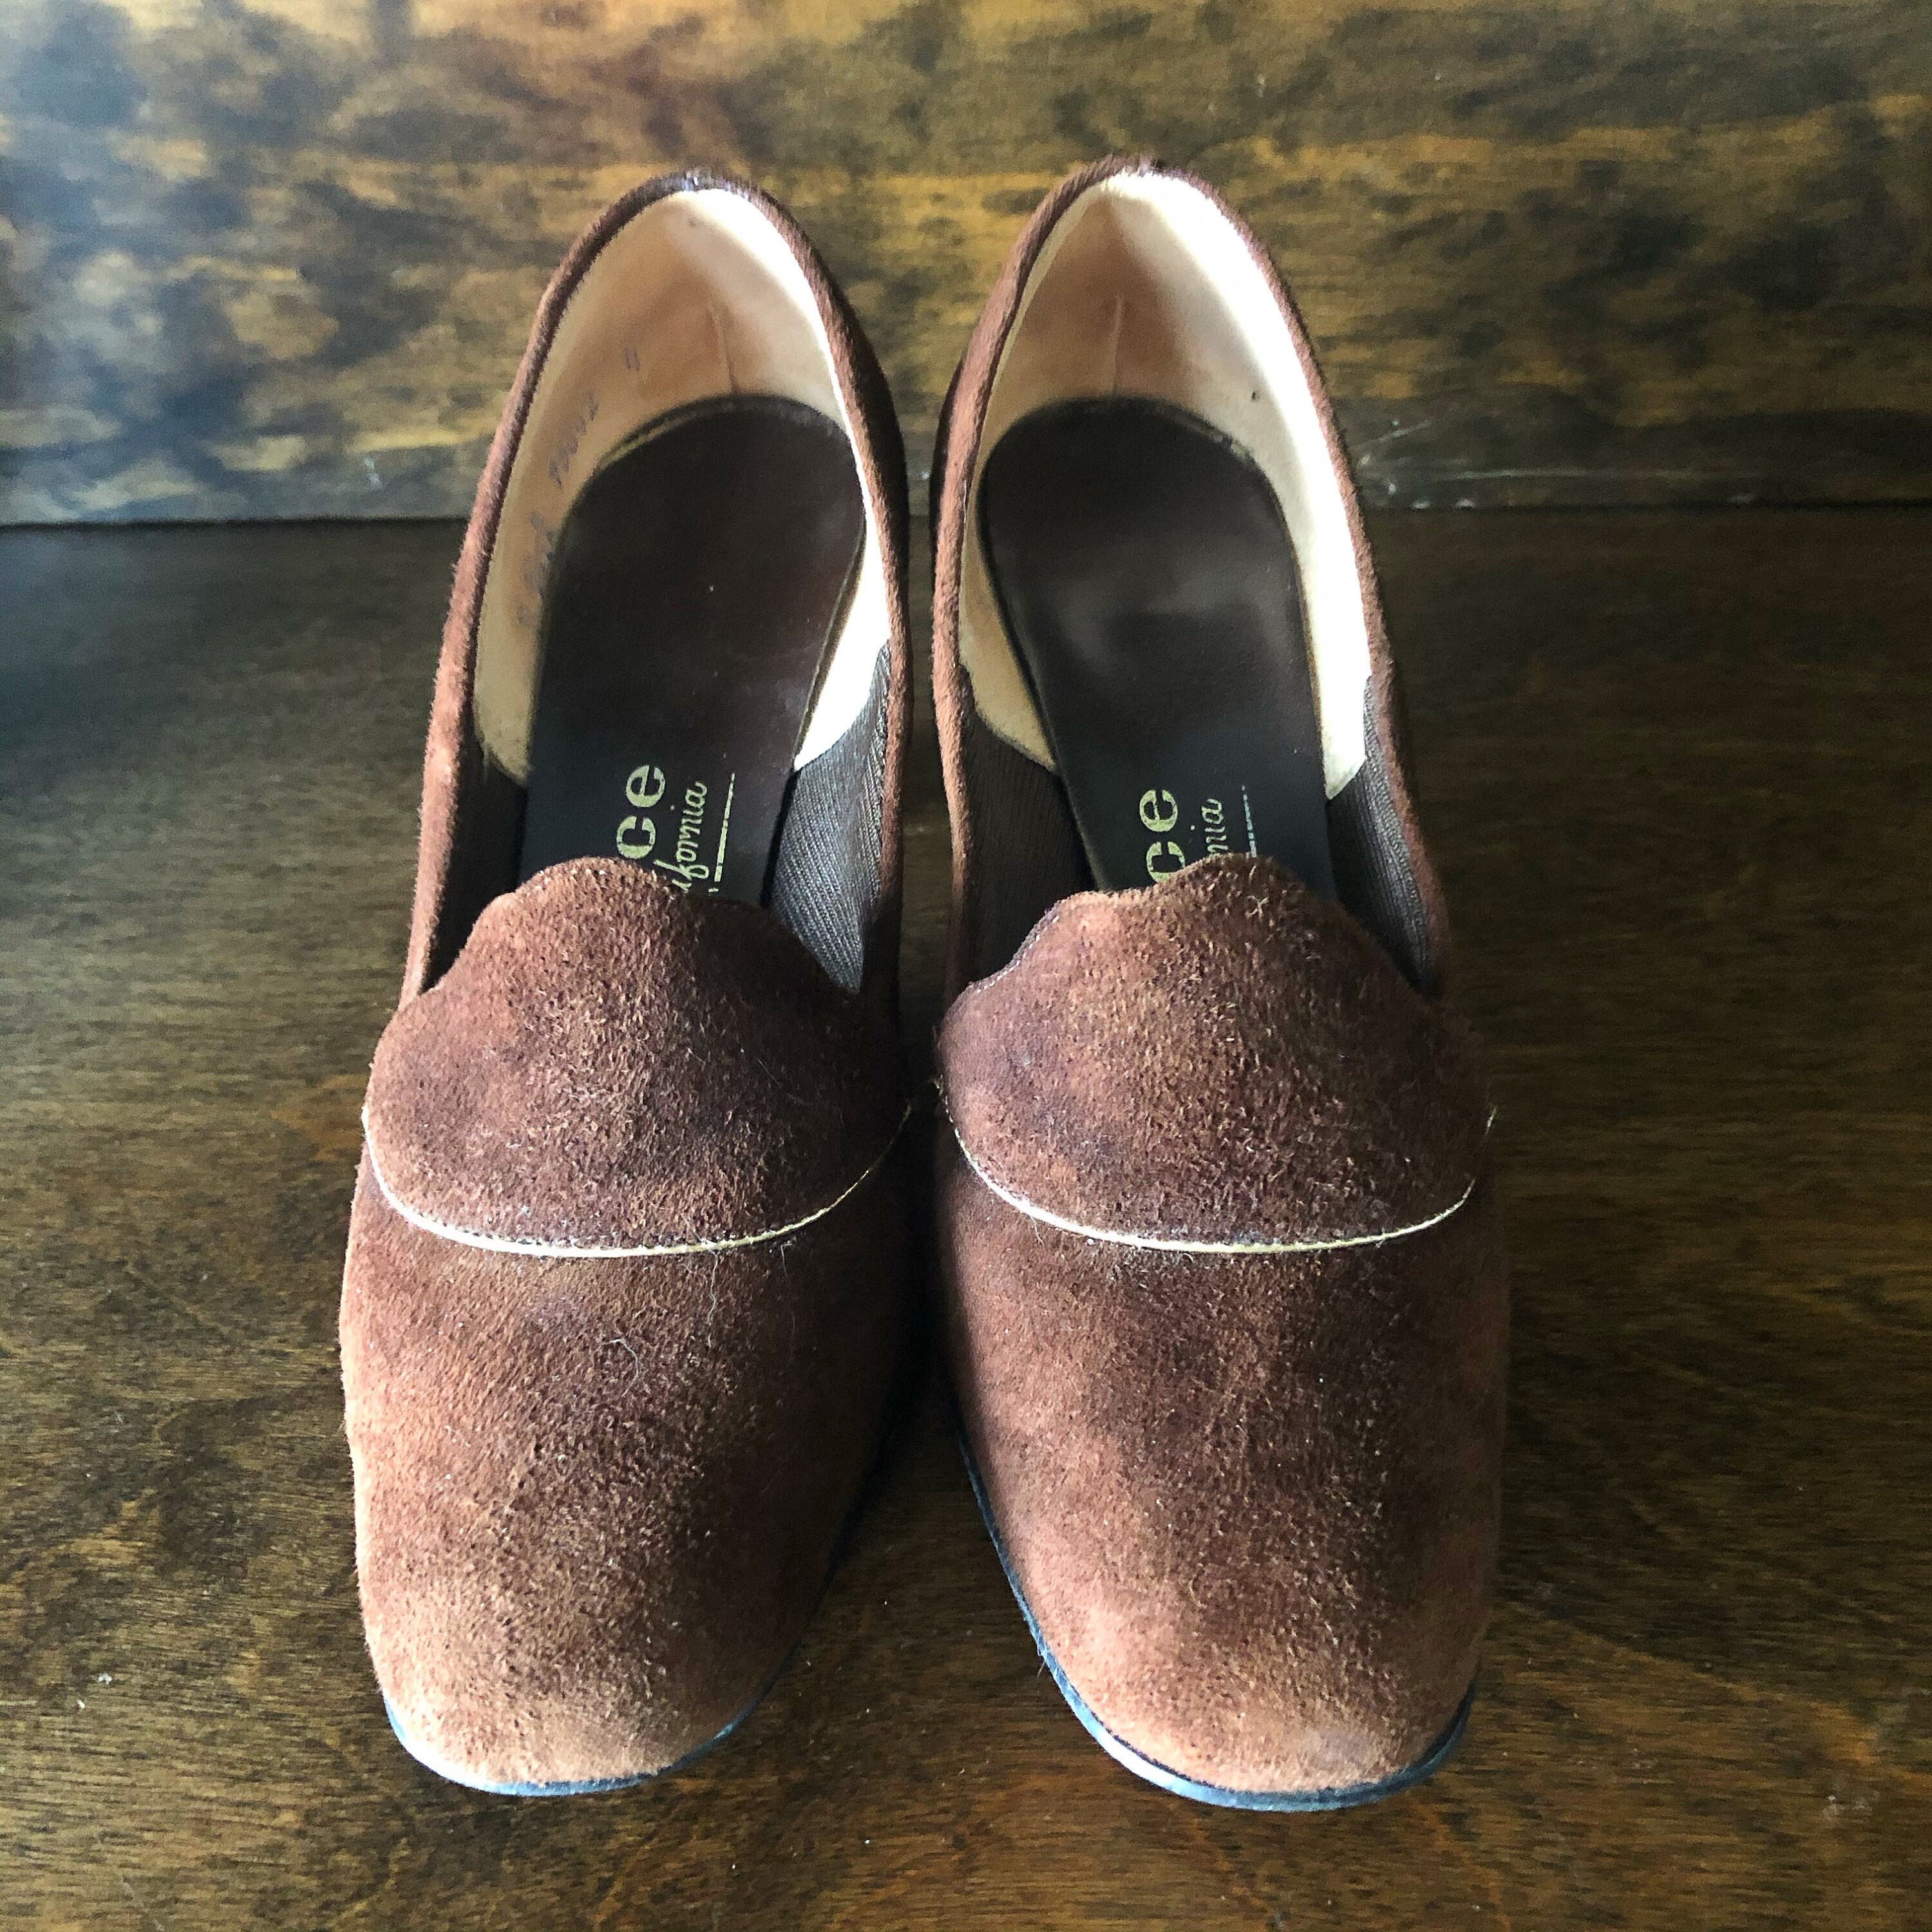 Vintage Shoes Brown Suede 1960's Mod Pumps Square Heel - Etsy